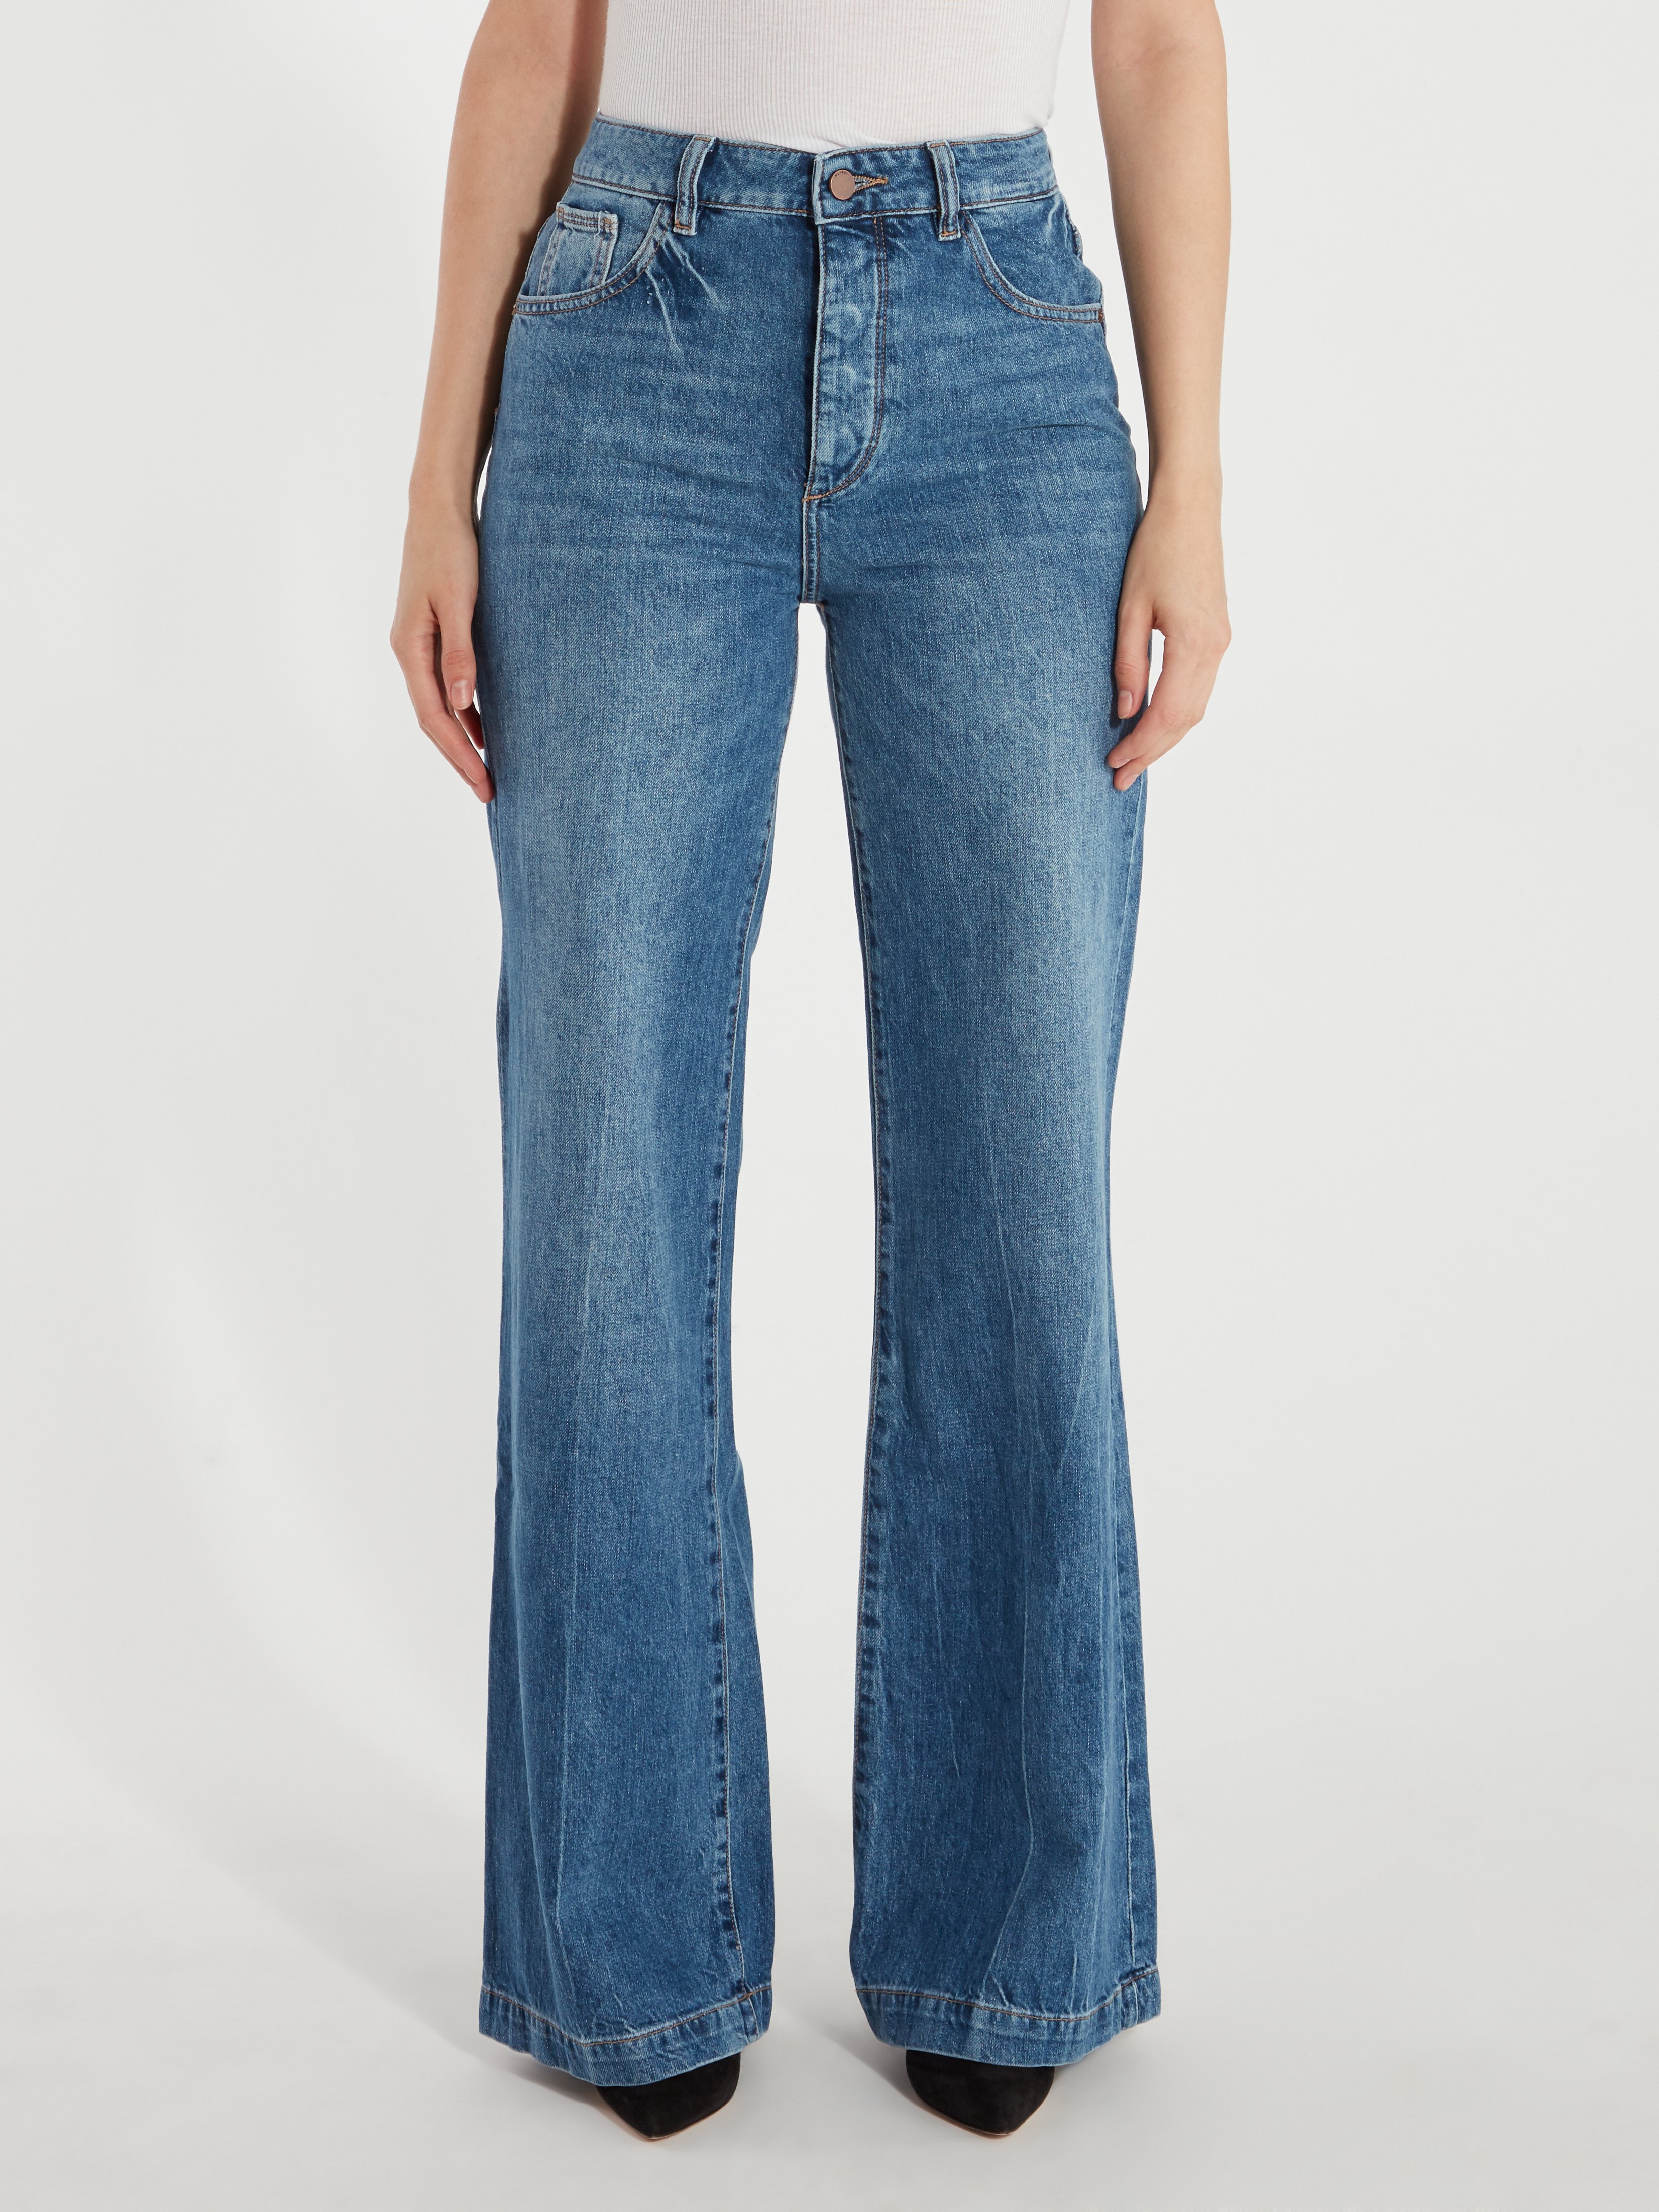 dl1961 hepburn jeans